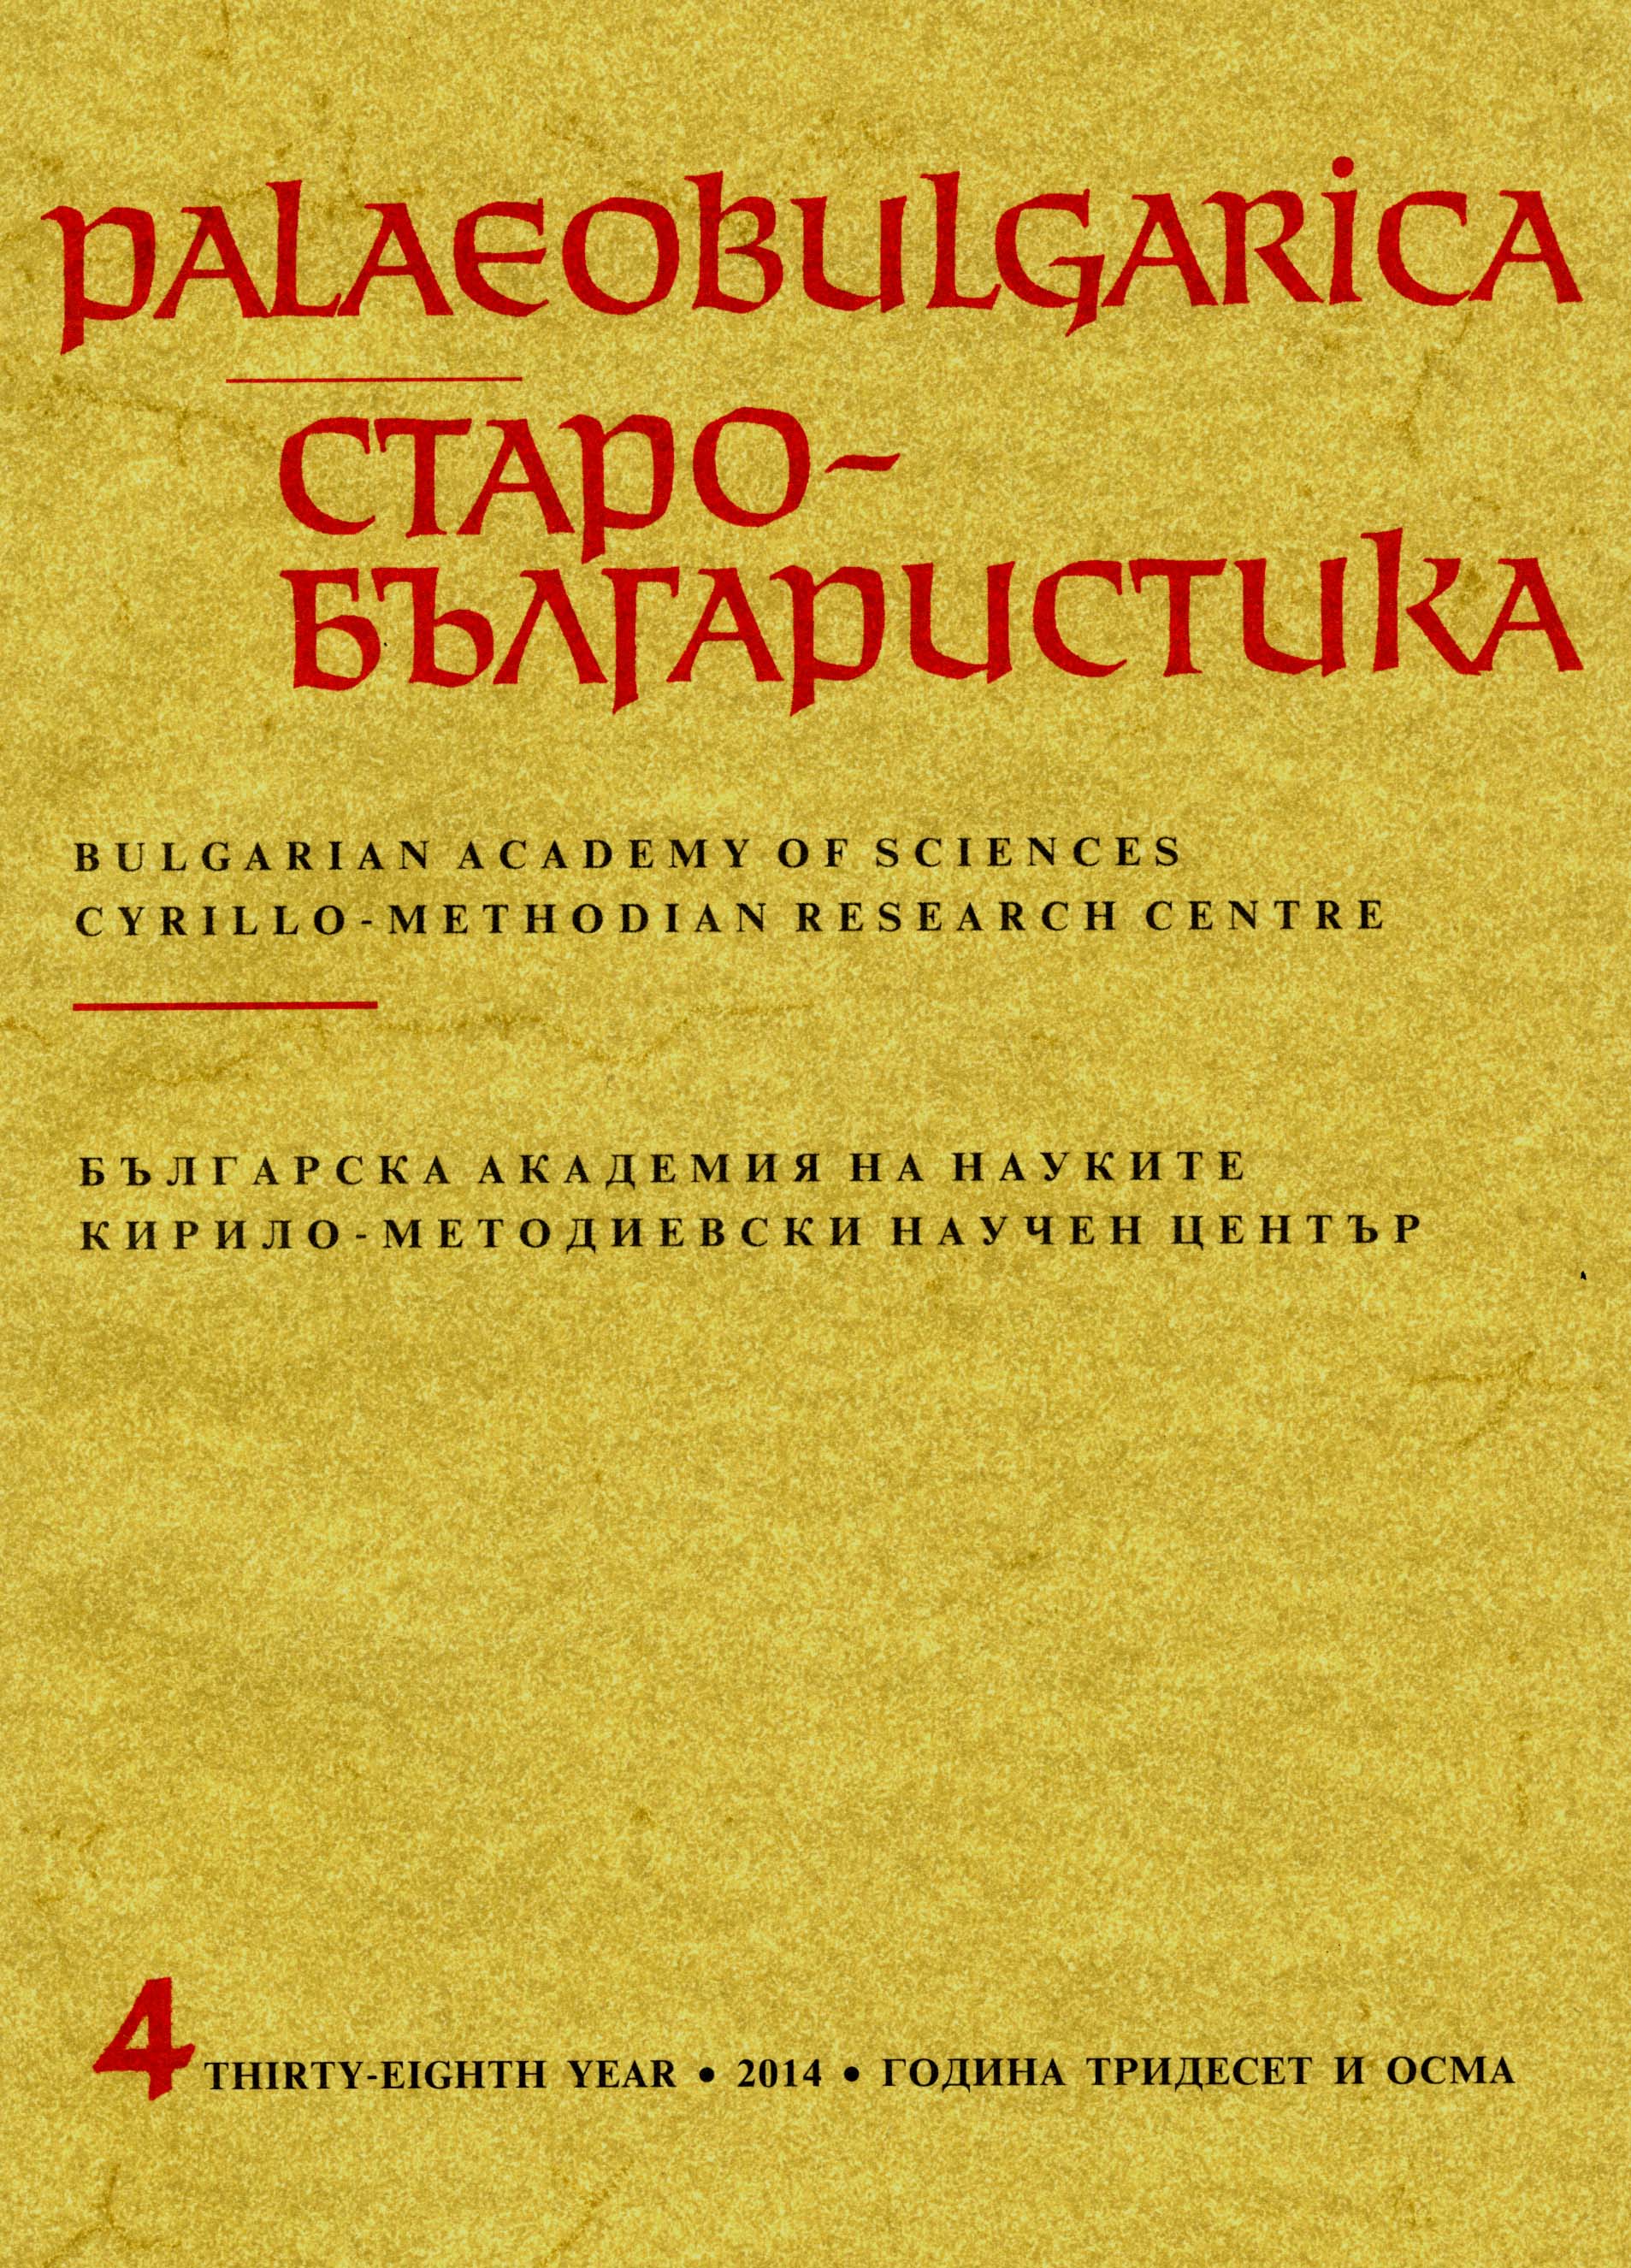 Славянското средновековно писмено наследство и информационните технологии